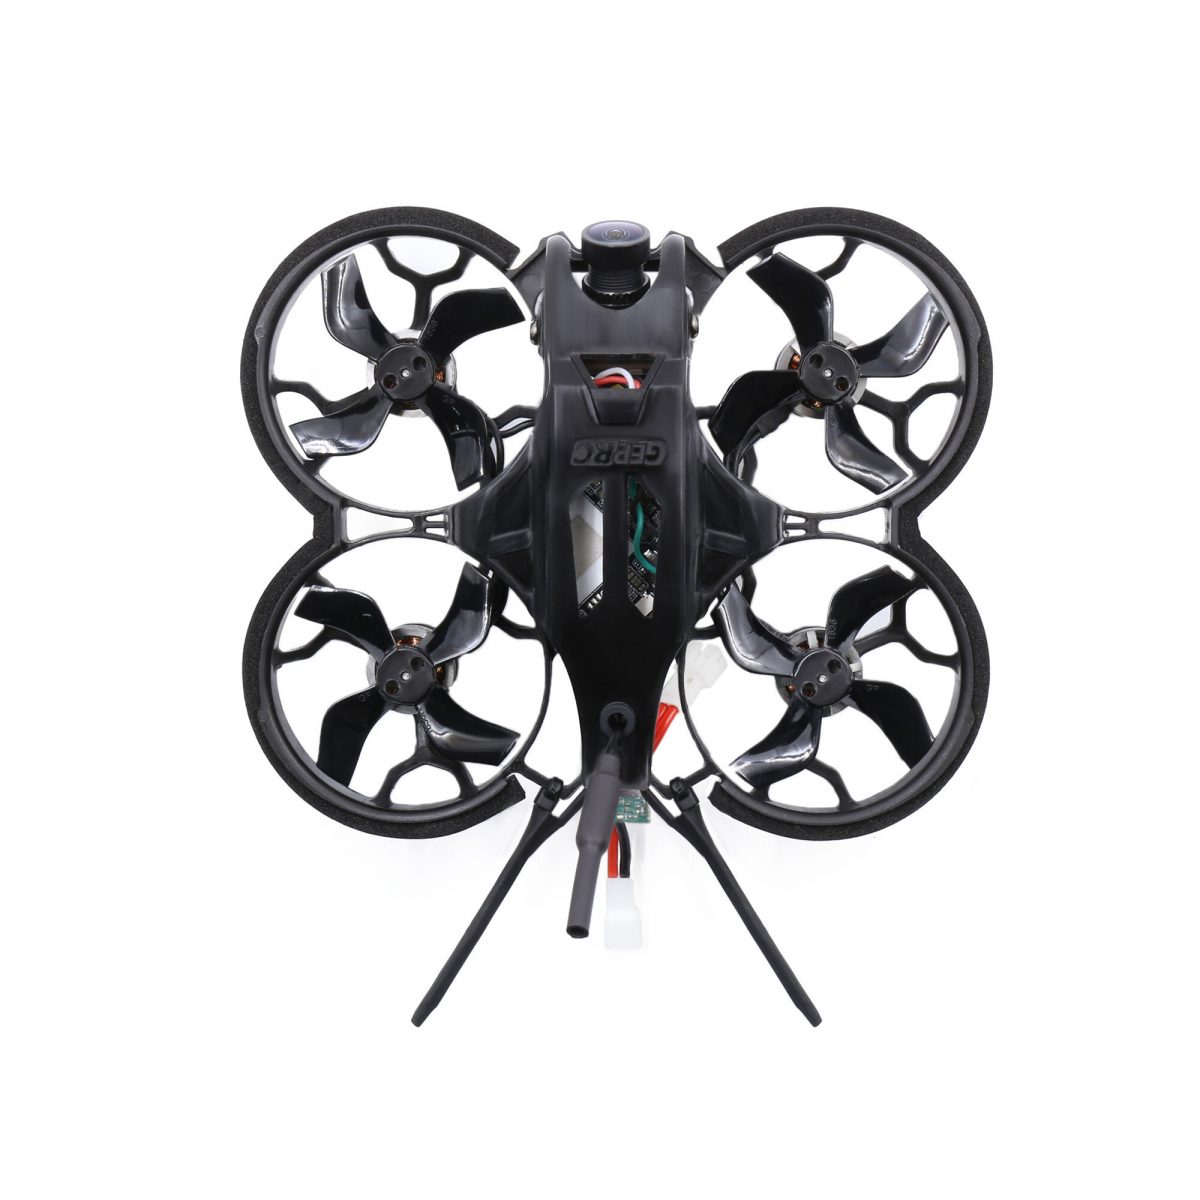 Propel RC Quark Indoor/Outdoor Stunt Micro Drone Quadrocopter